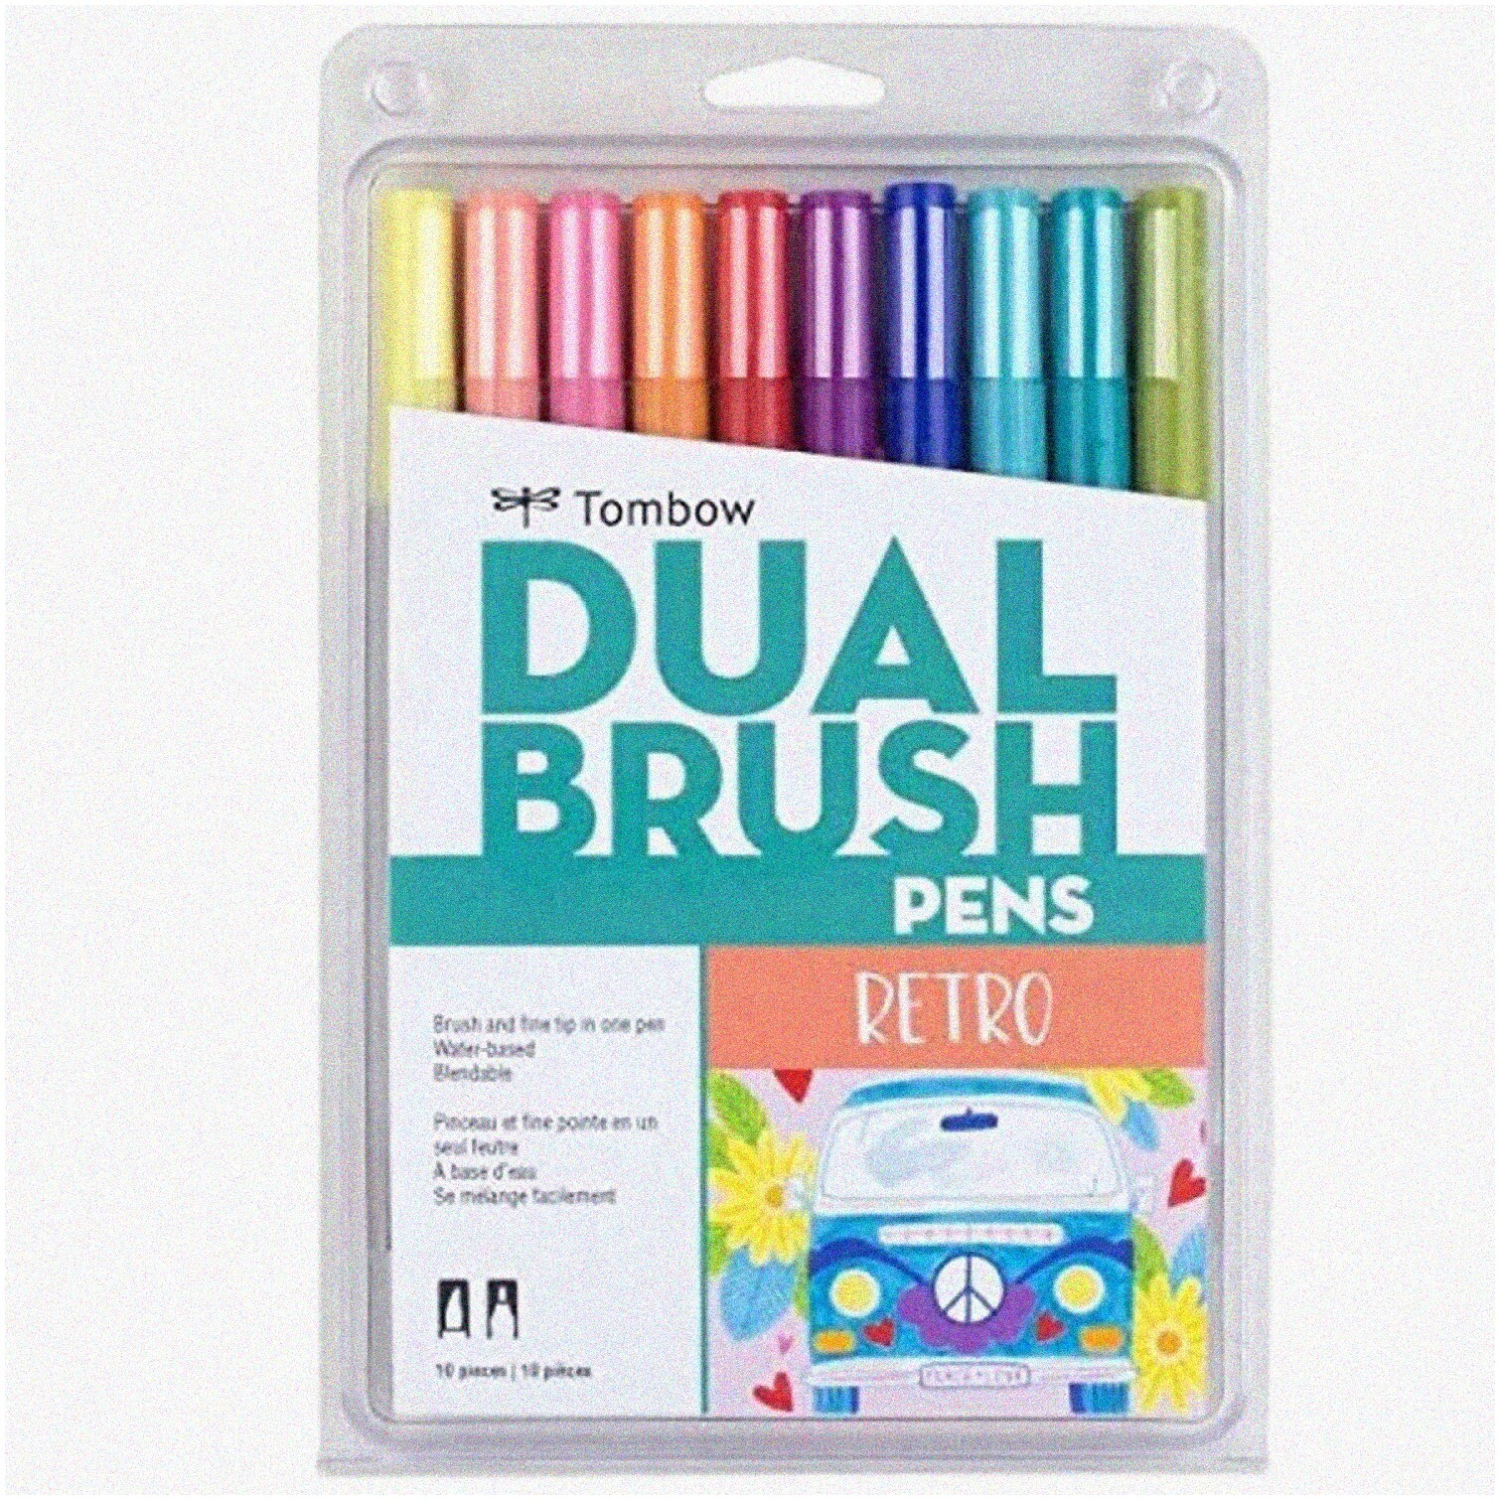 RetroBlend Dual Brush Art Markers - 10 Pack, Blendable, Fine & Brush Tip Pens